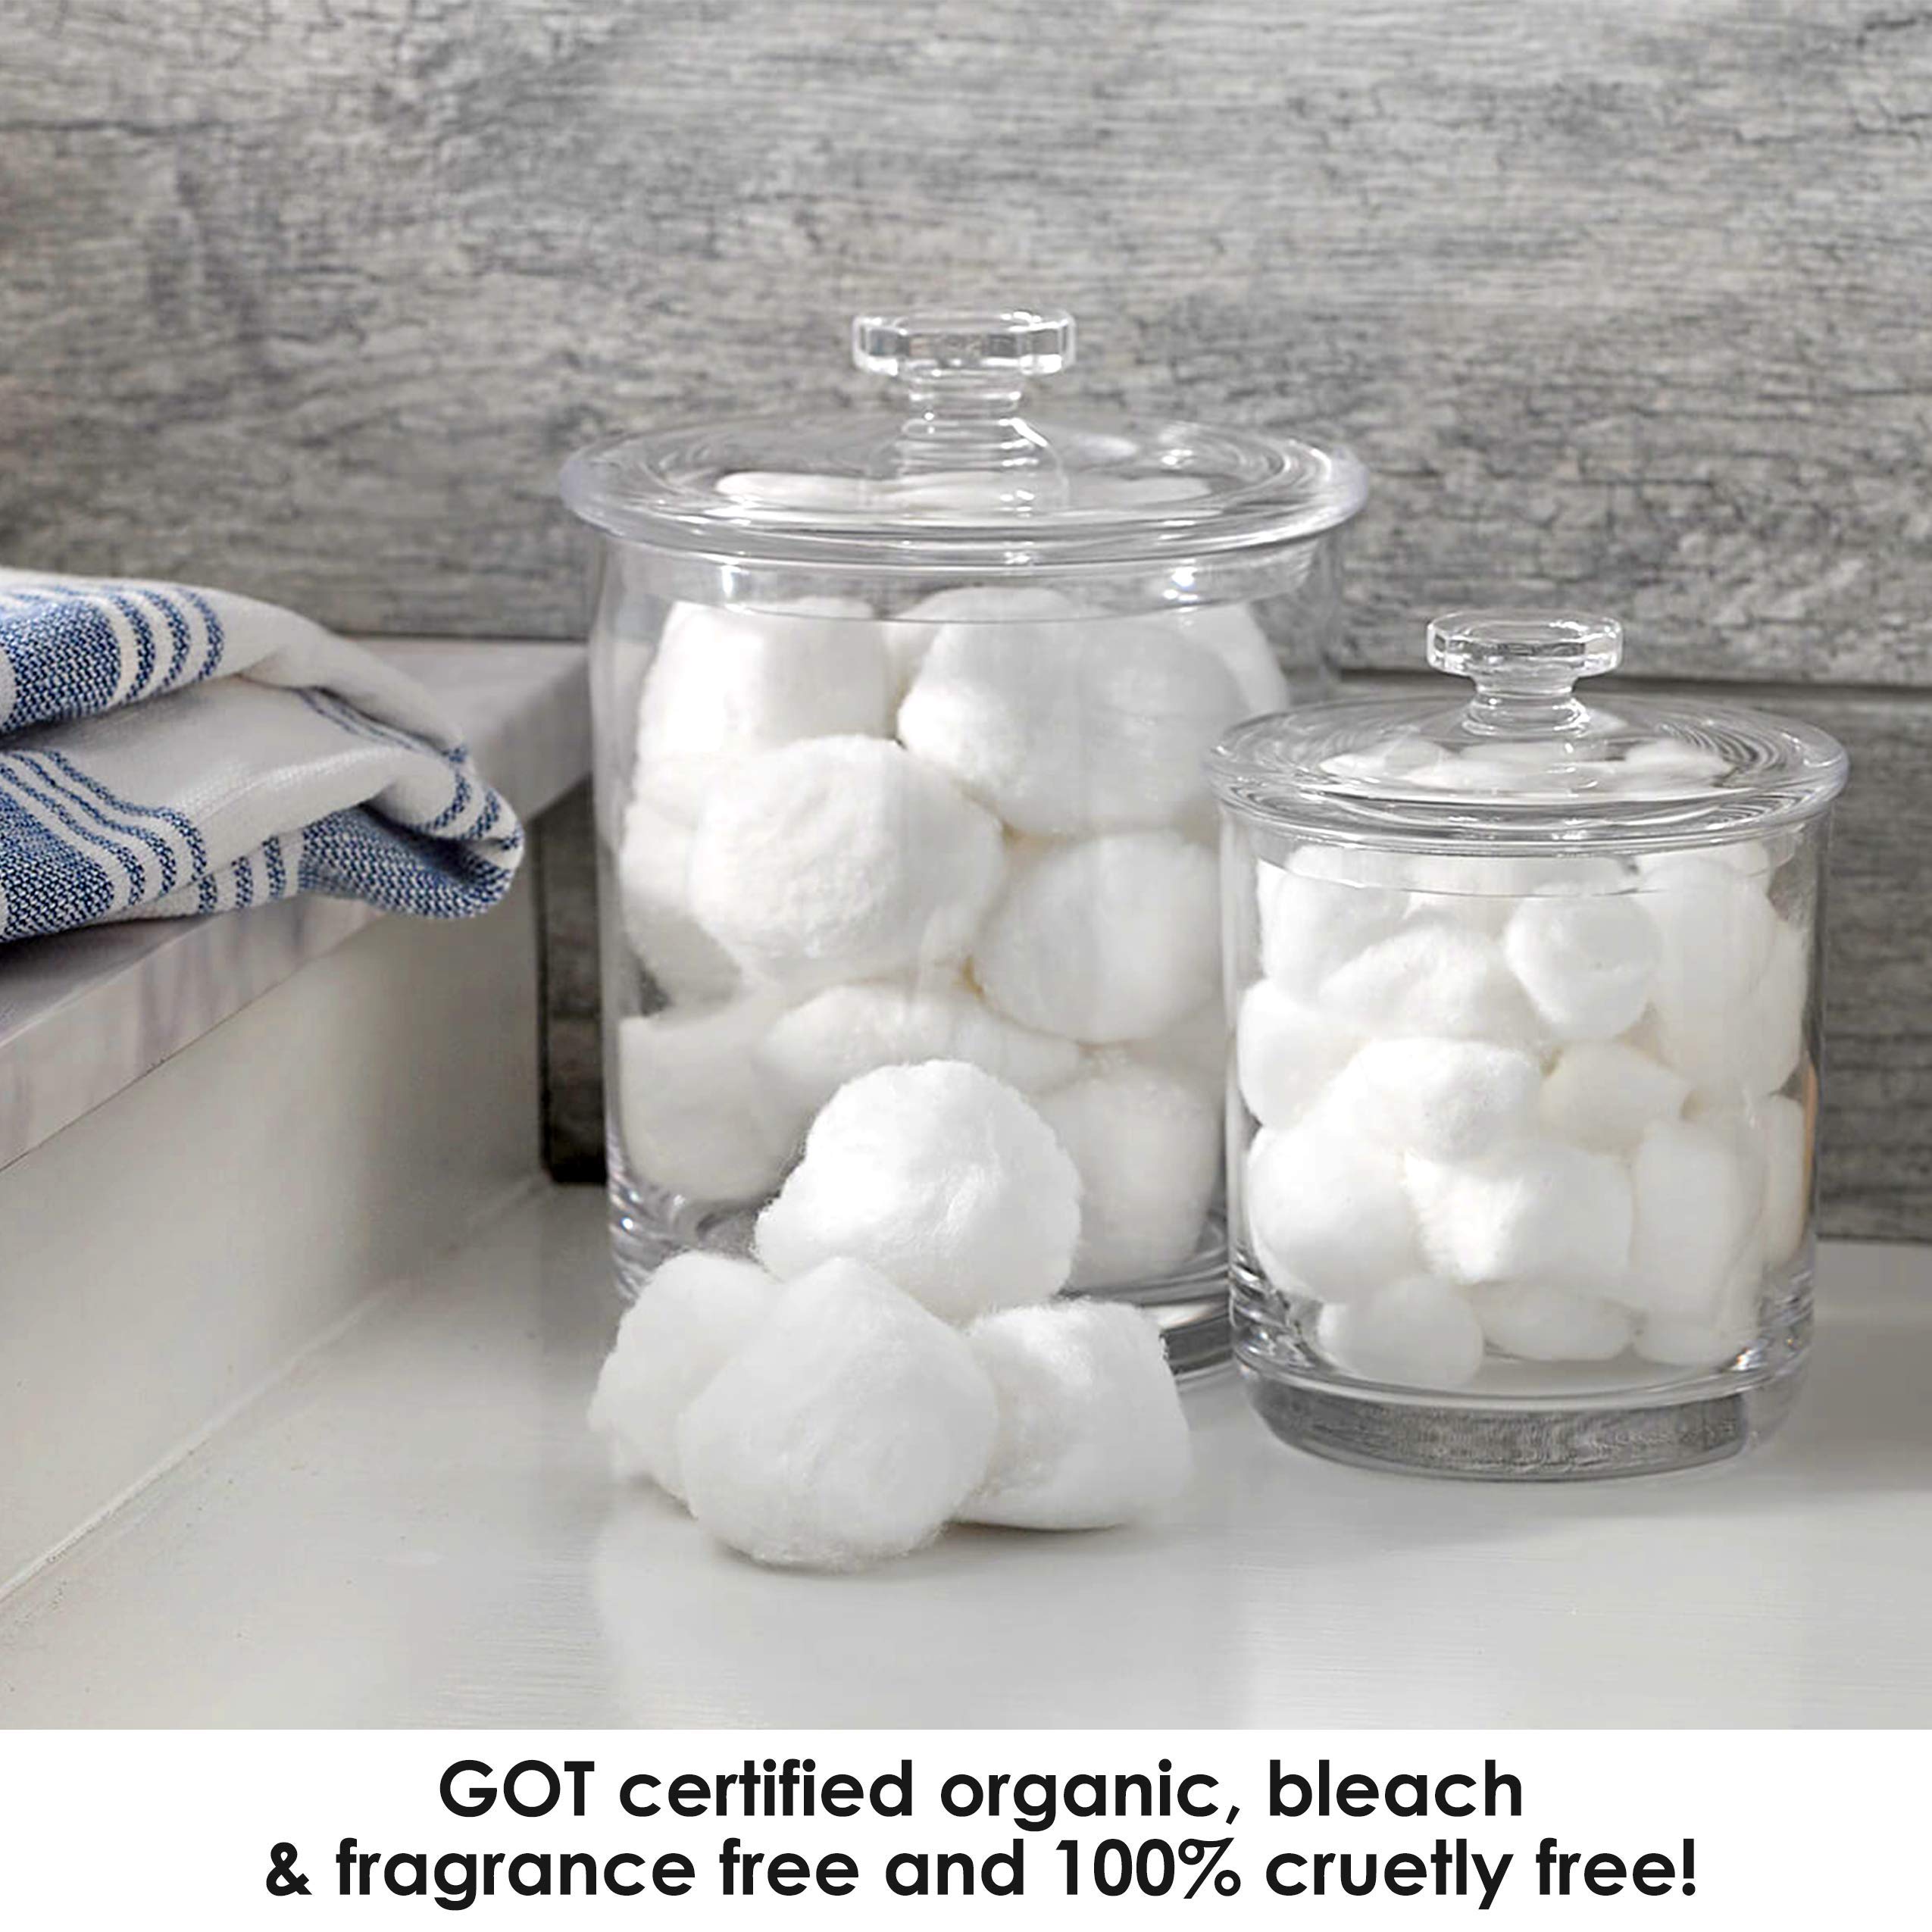 Sky Organics Organic Jumbo Cotton Balls for Sensitive Skin, 100% Pure GOTS Certified Organic for Beauty & Personal Care, 60 ct.